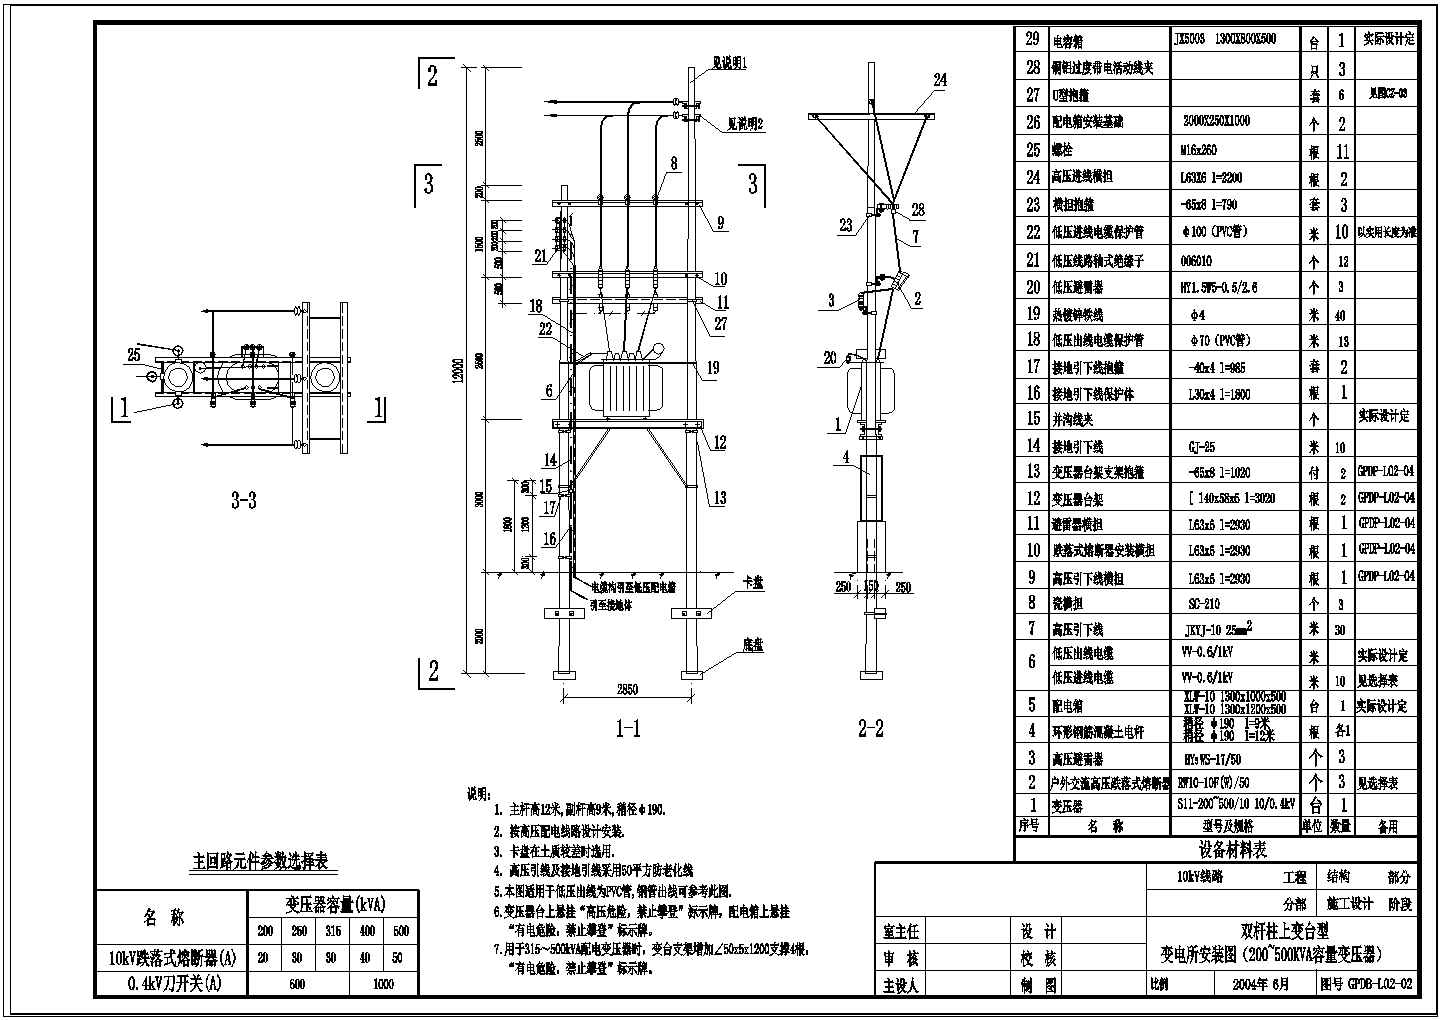 10kV典型供电系统CAD设计图